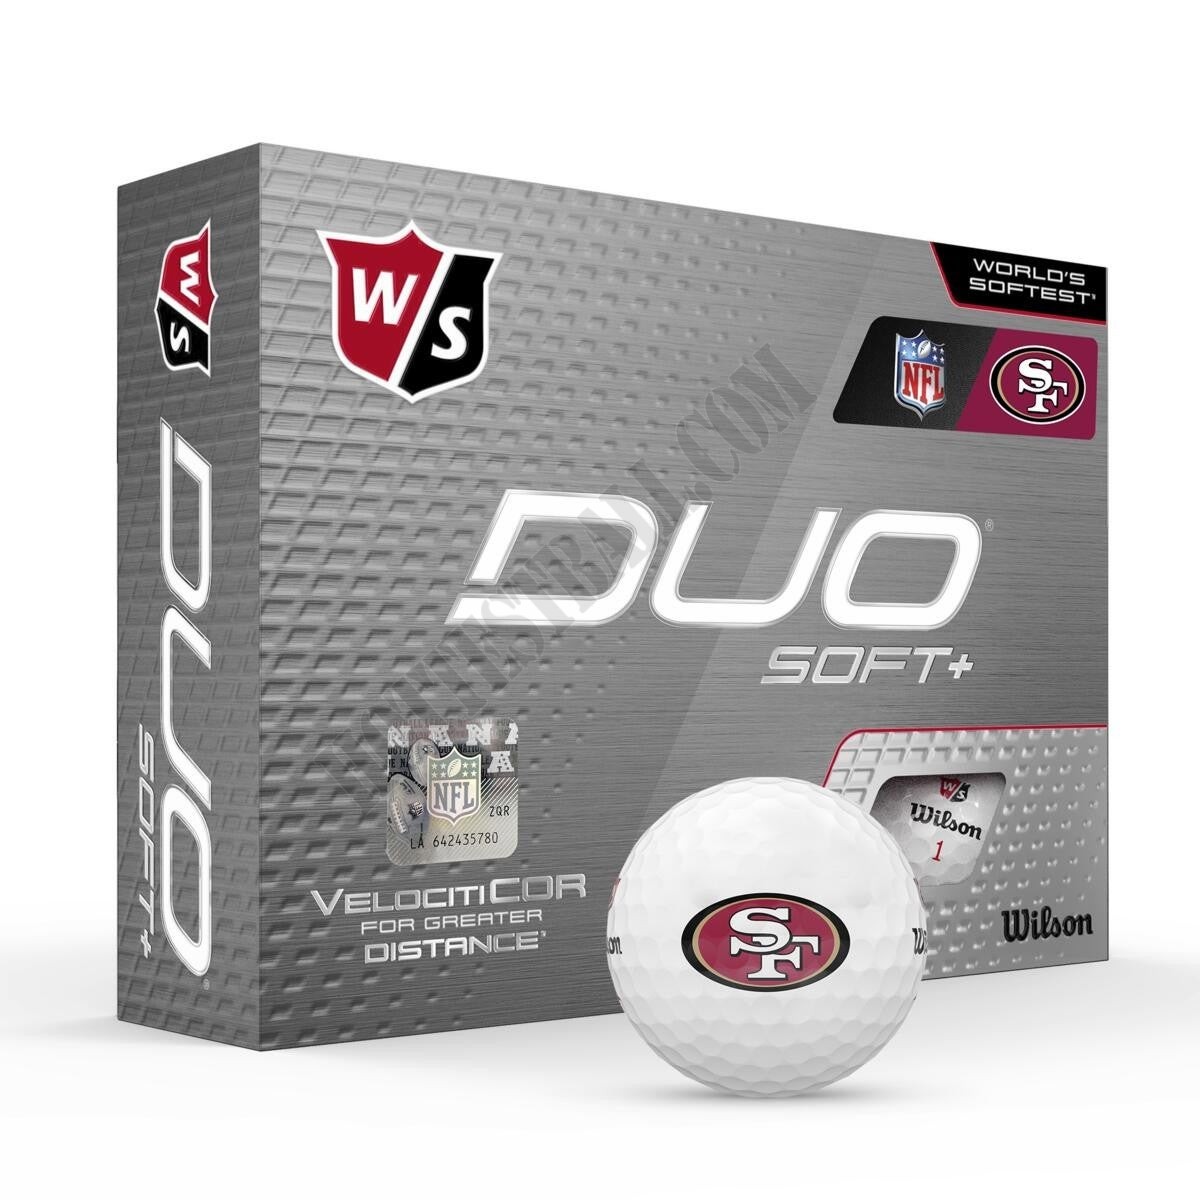 Duo Soft+ NFL Golf Balls - San Francisco 49ers ● Wilson Promotions - -0